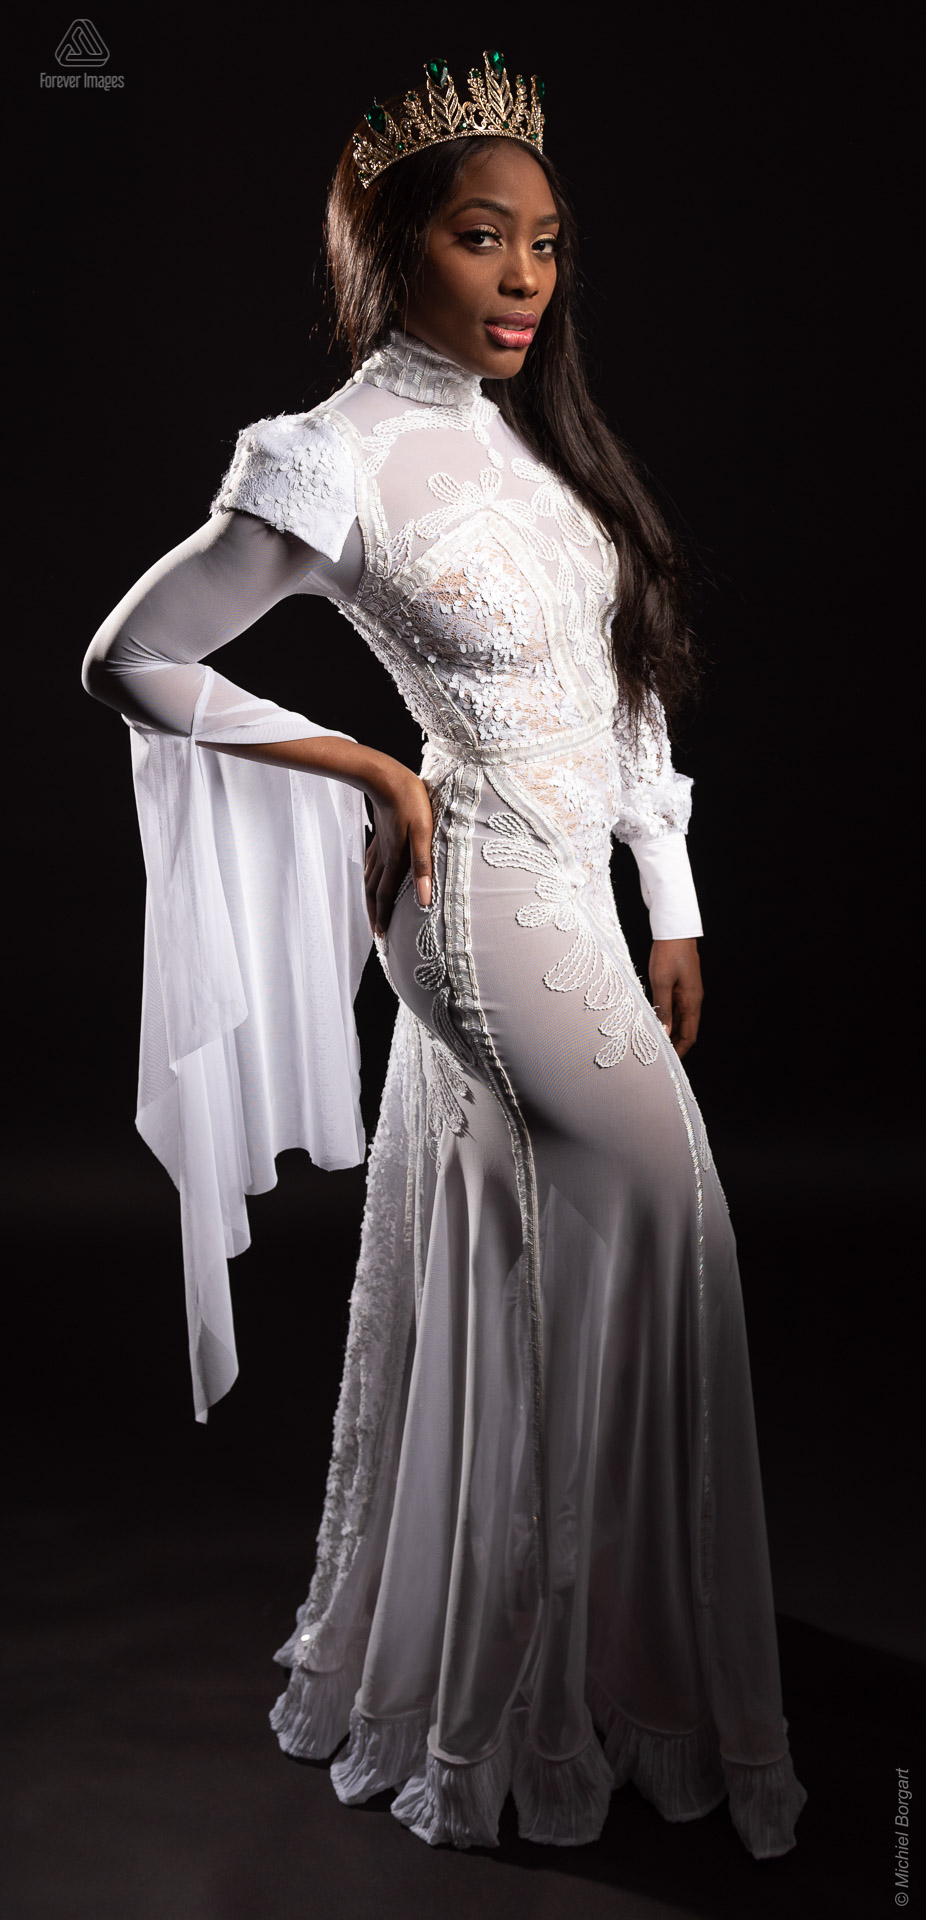 Fashionfoto witte jurk totaal kroon hand in zij | Mariana Pietersz Miss Avantgarde Ronald Rizzo Piu Colore | Fashionfotograaf Michiel Borgart - Forever Images.